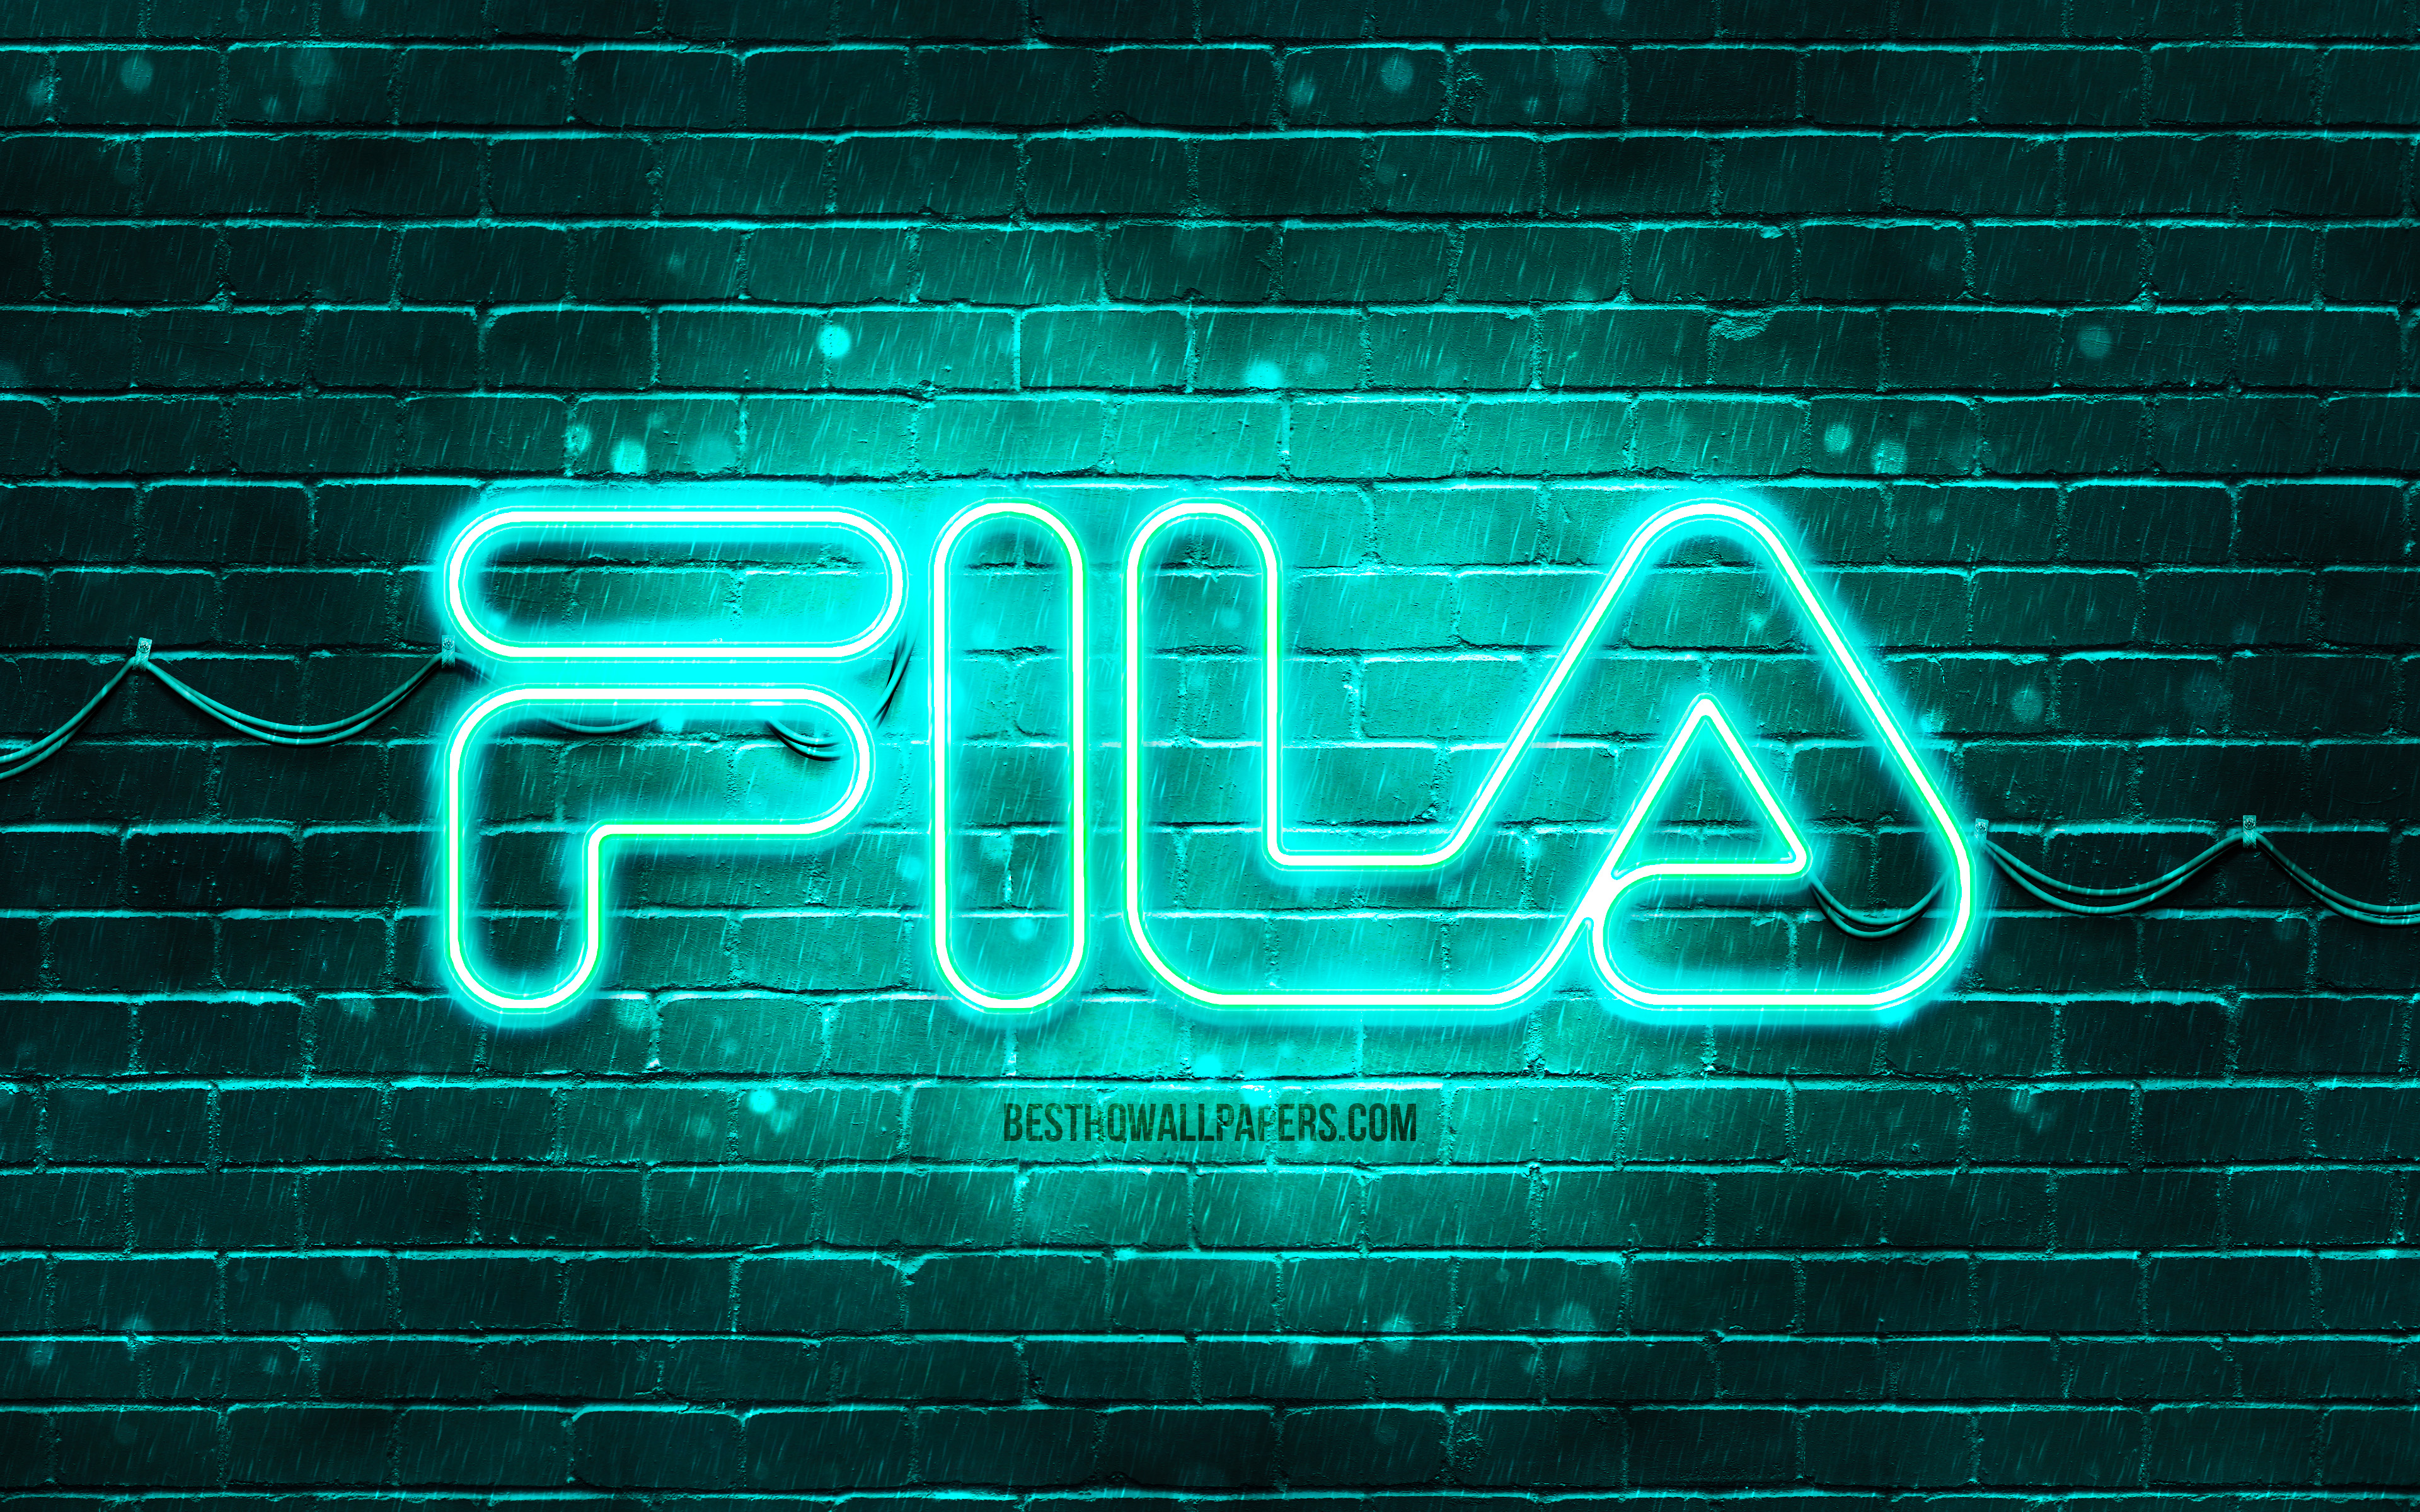 Download wallpaper Fila turquoise logo, 4k, turquoise brickwall, Fila logo, brands, Fila neon logo, Fila for desktop with resolution 3840x2400. High Quality HD picture wallpaper